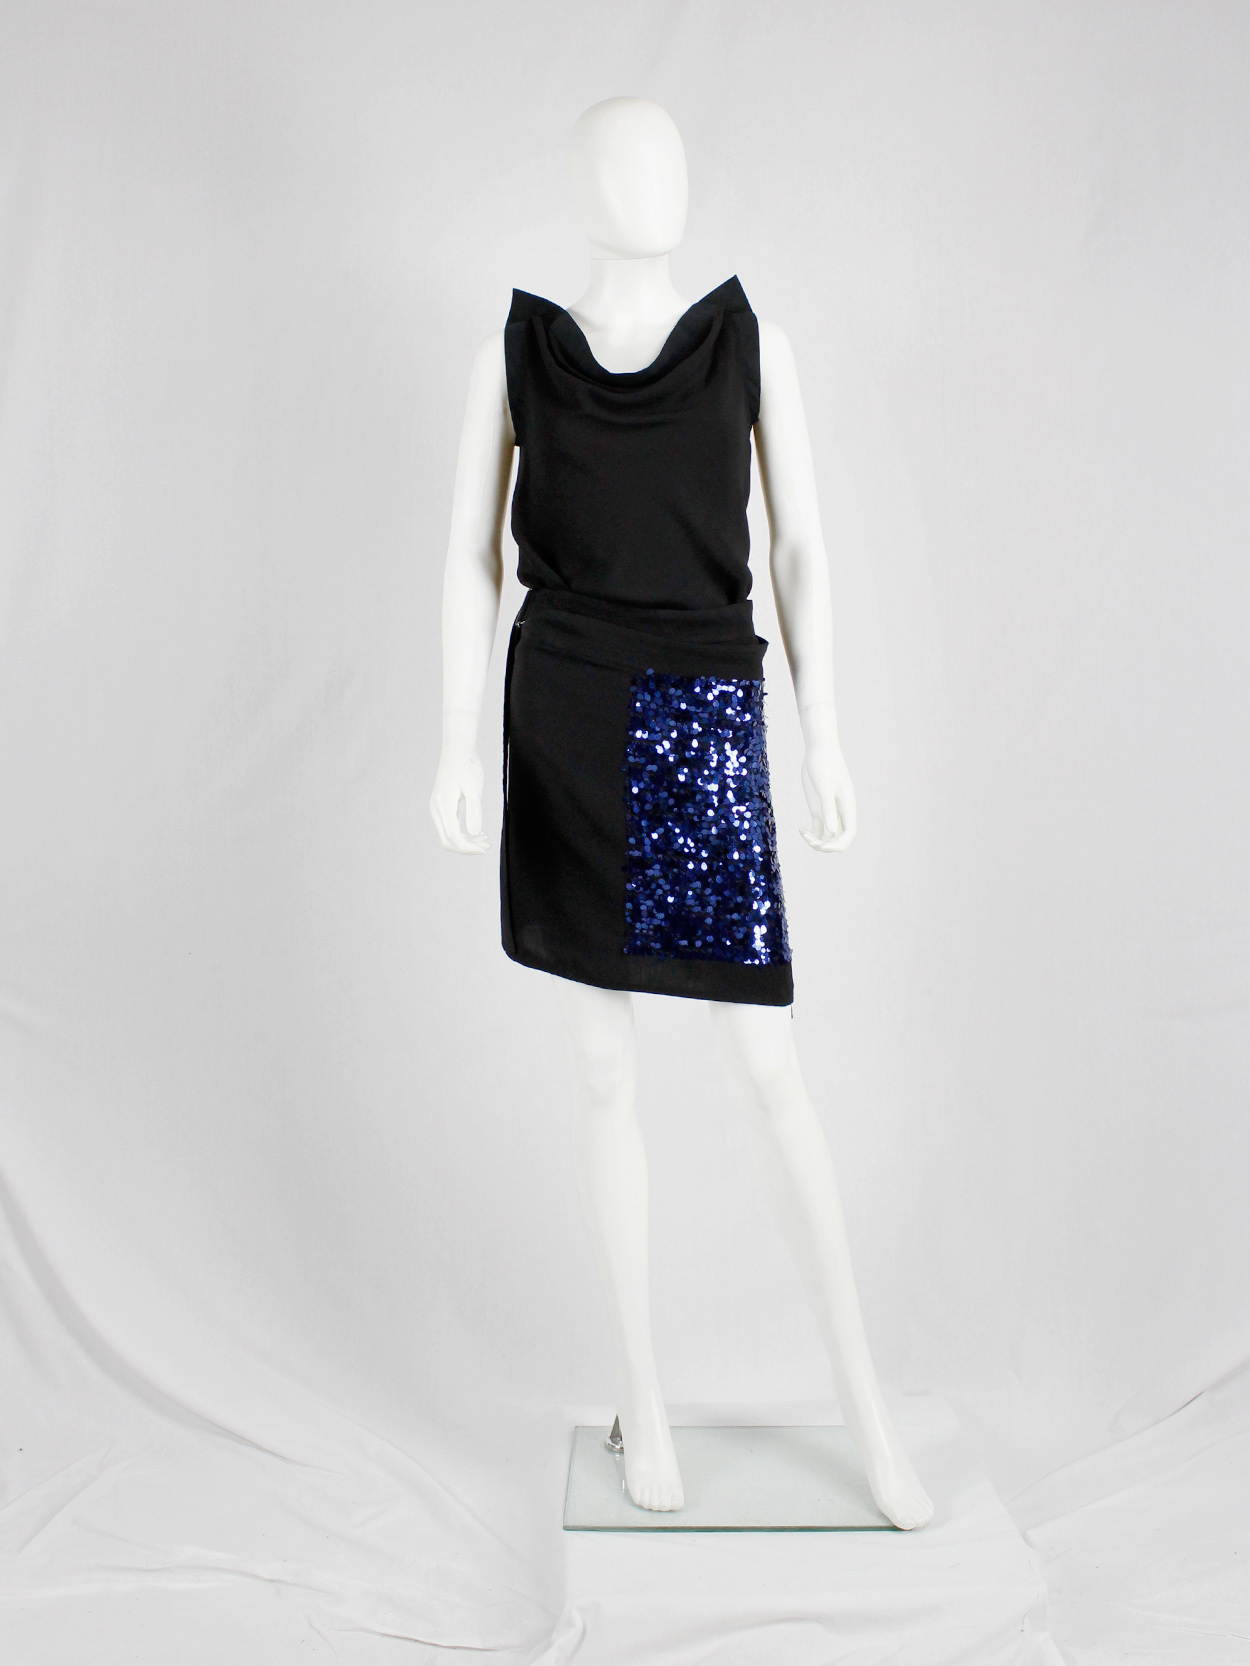 Ann Demeulemeester black wrap skirt with blue sequinned panel 1990s (2)